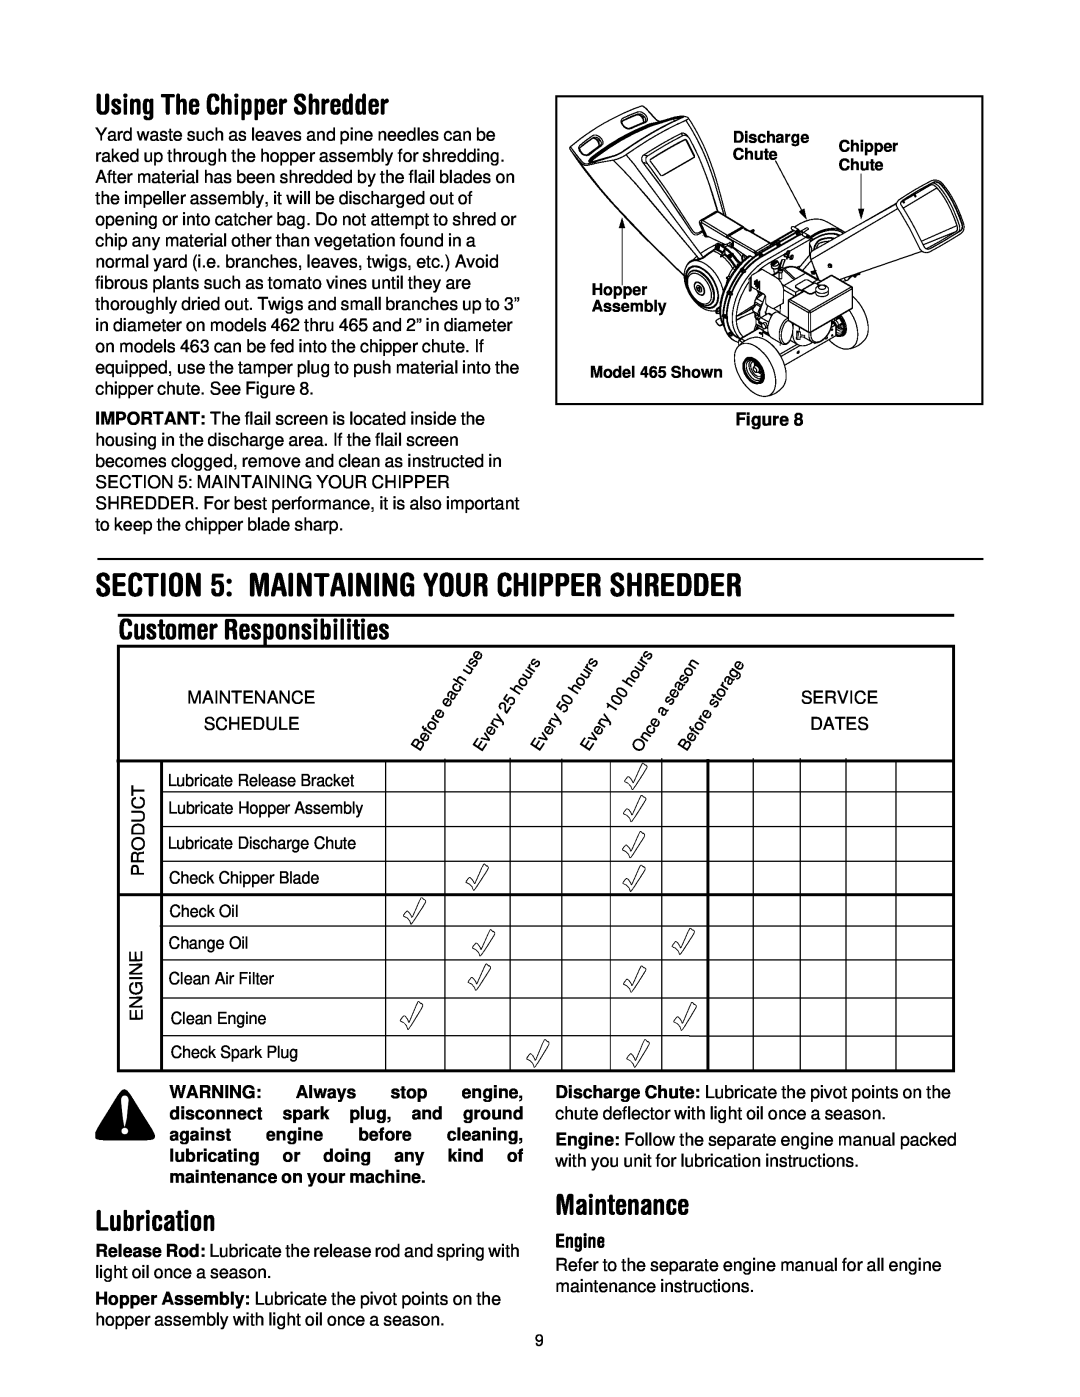 MTD 465 Using The Chipper Shredder, Customer Responsibilities, Lubrication, Maintenance, Maintaining Your Chipper Shredder 